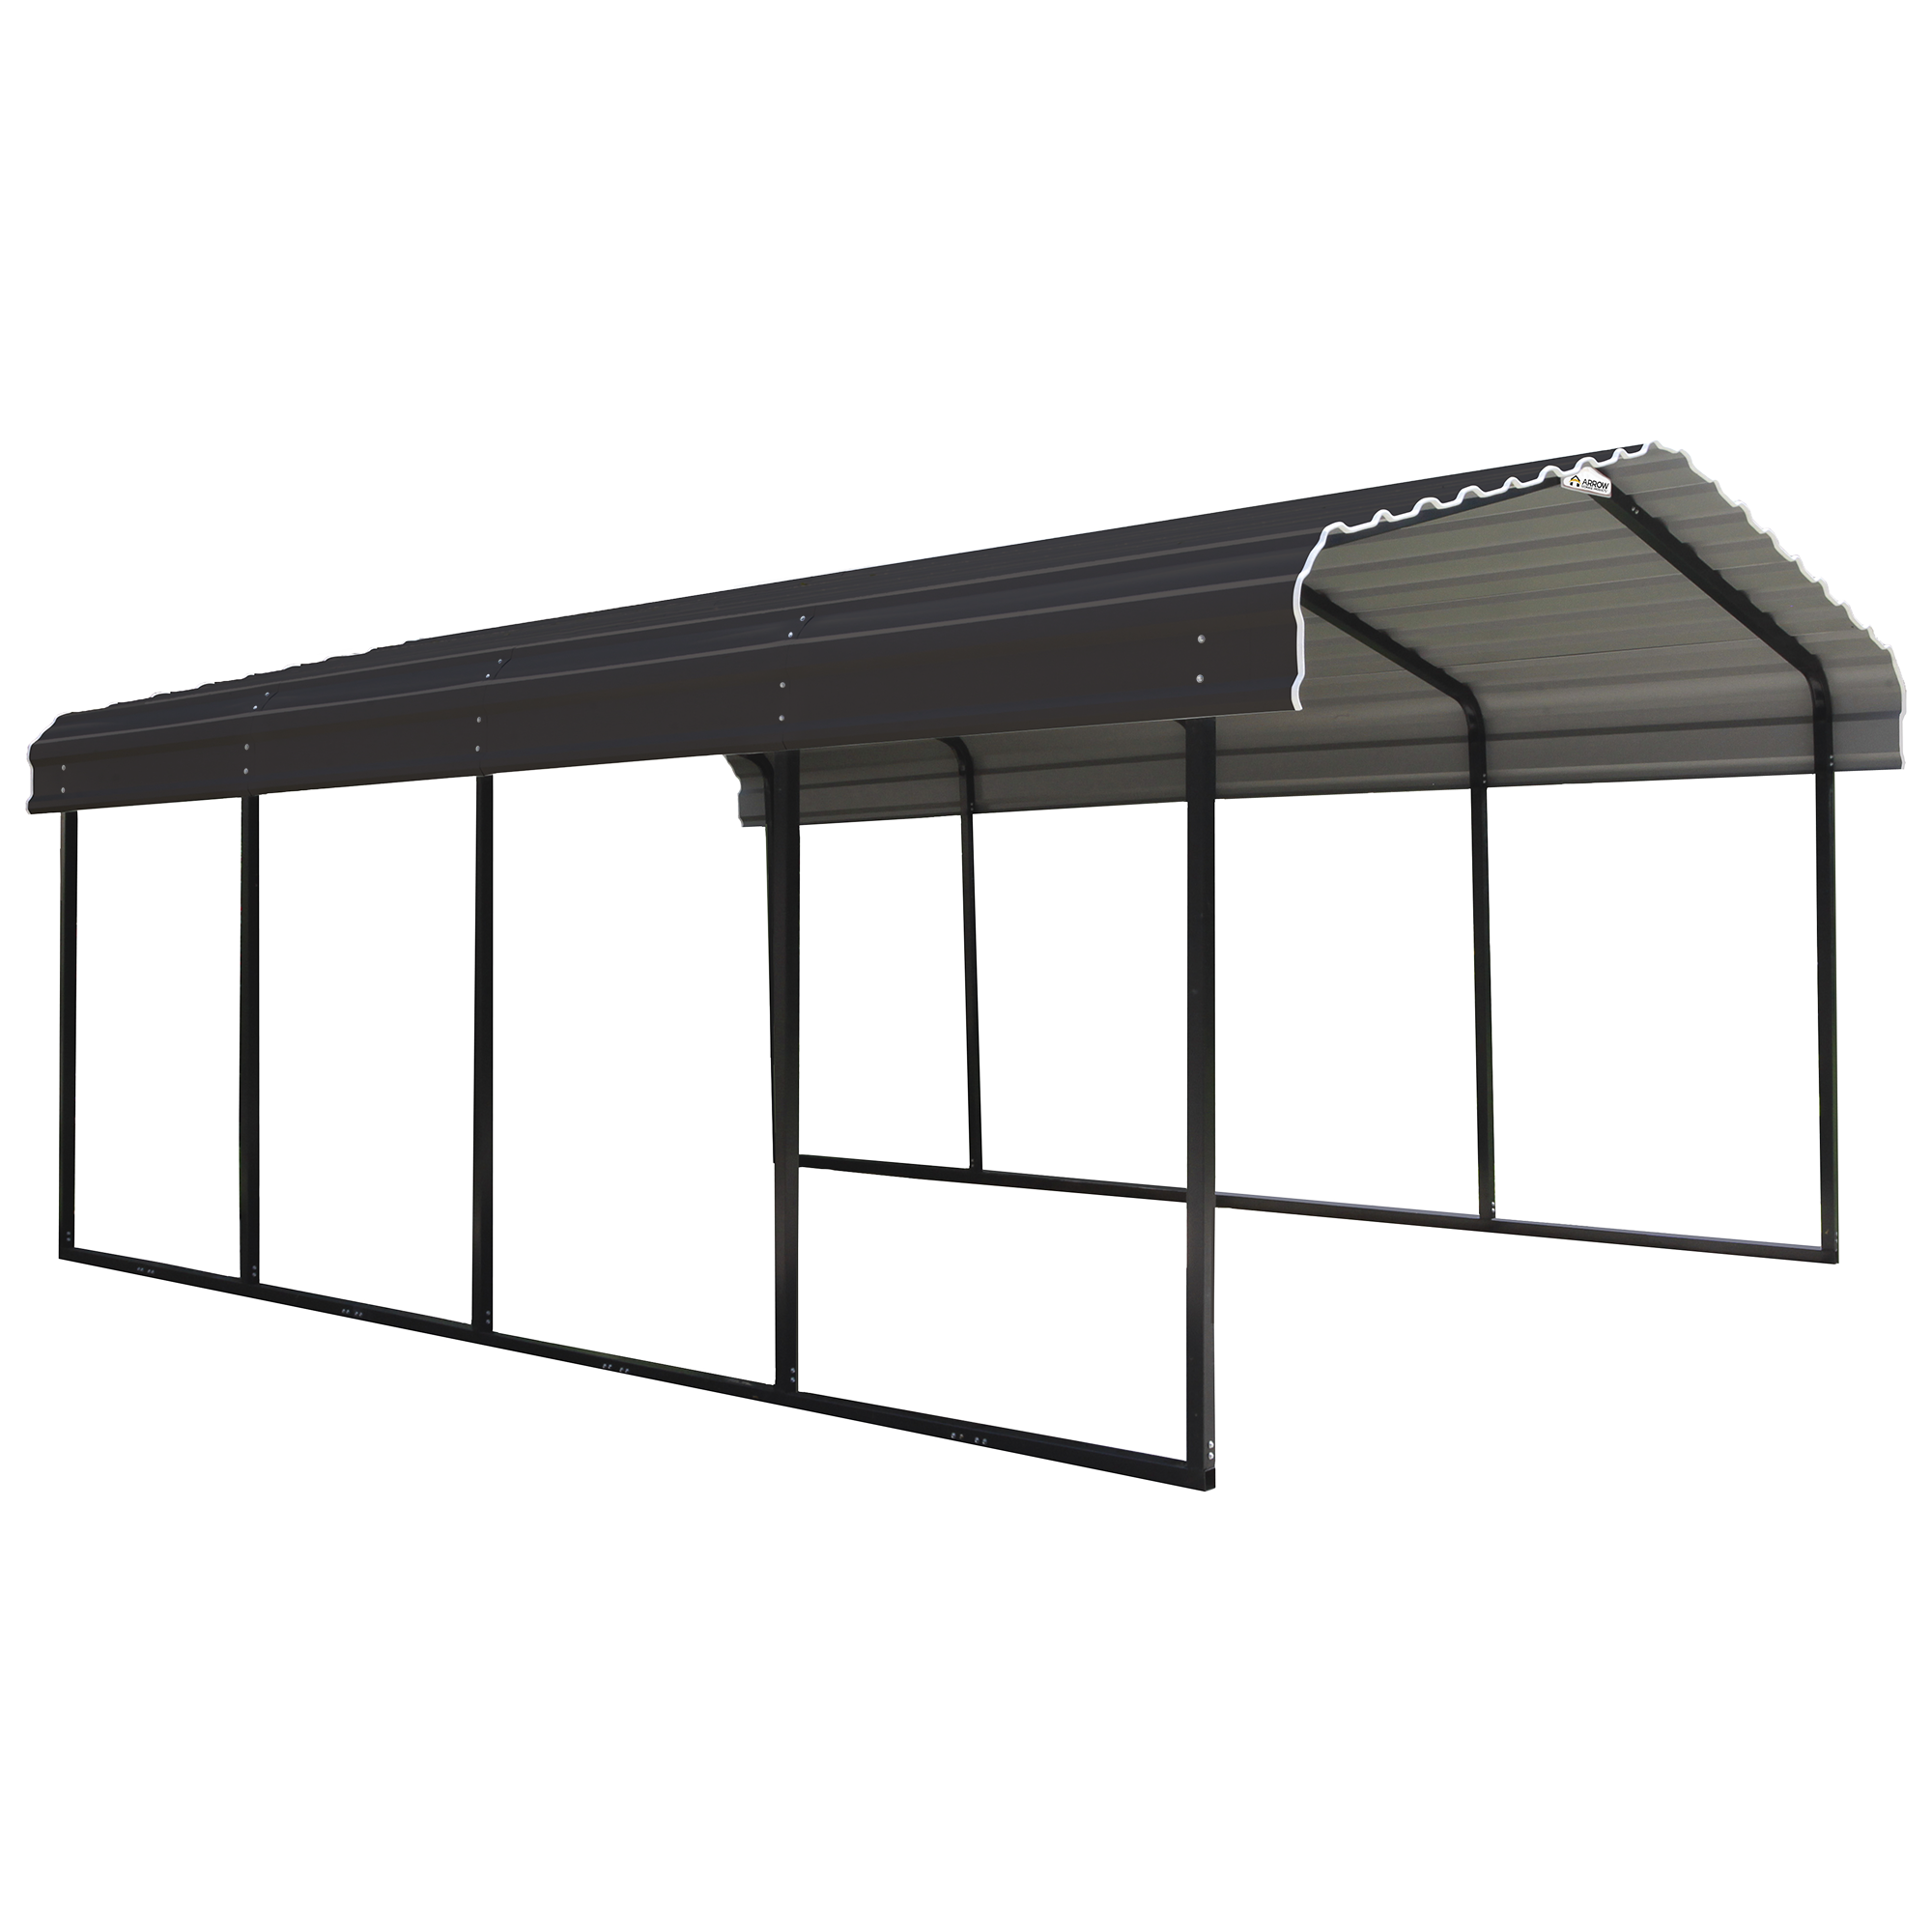 Carport 'Mailand' mit Walmdach schwarz Stahl 610 x 300 x 250 cm + product picture